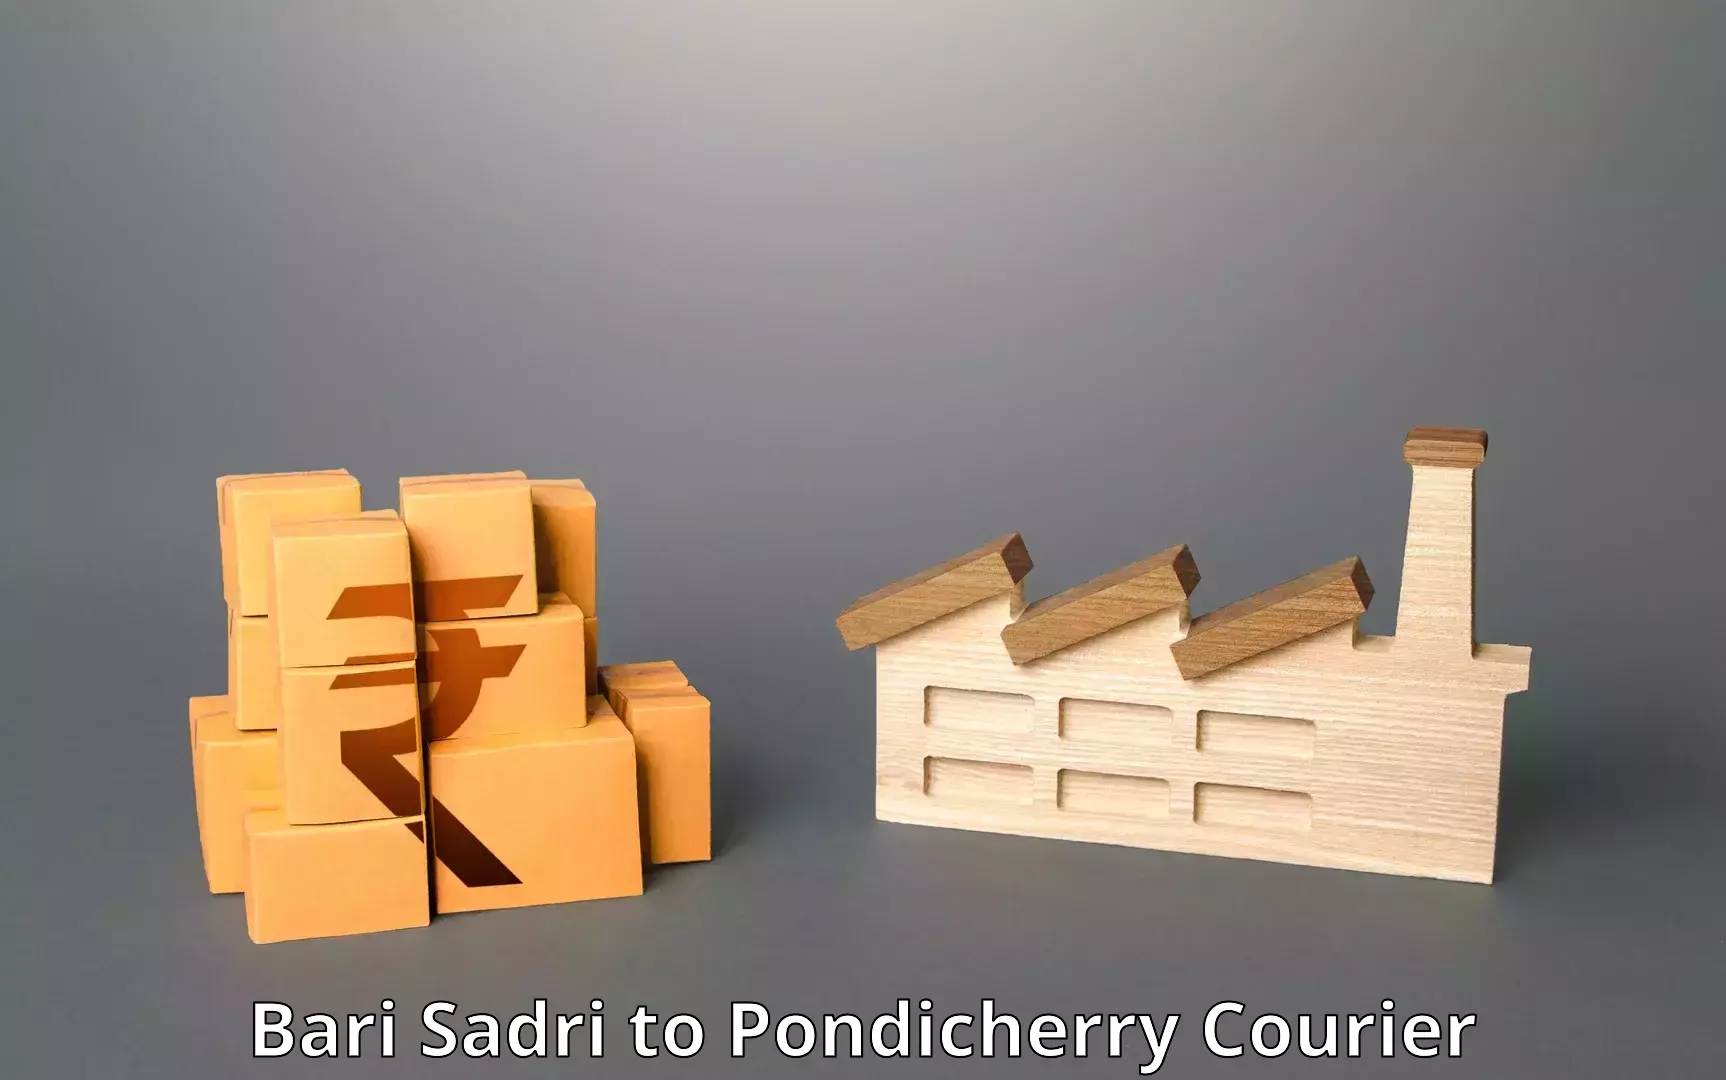 High-speed parcel service Bari Sadri to Pondicherry